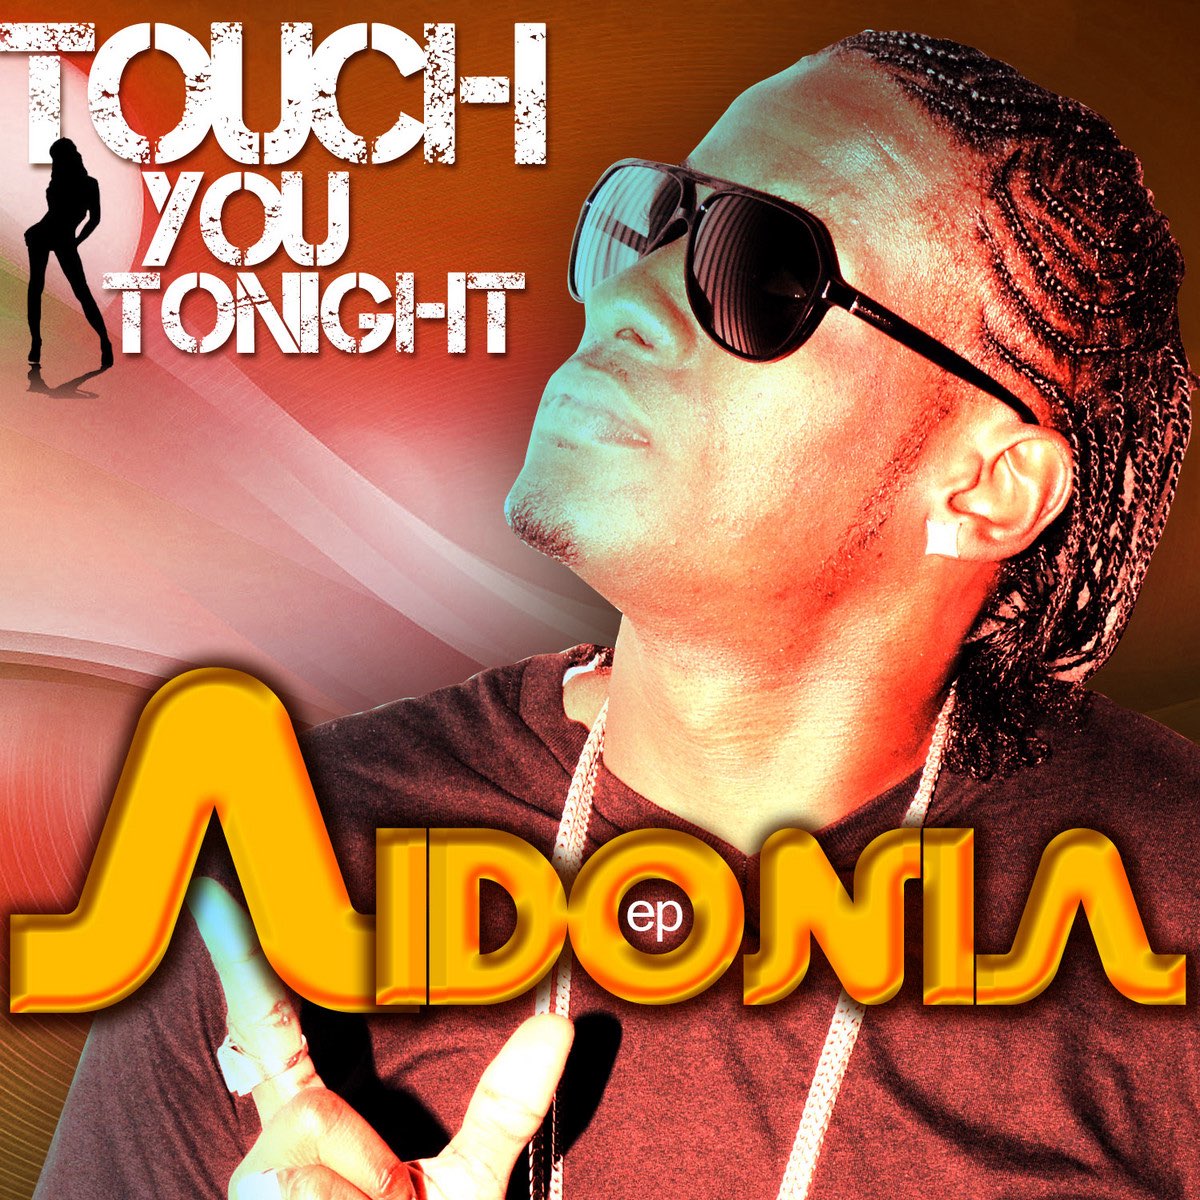 Touch You Tonight par Aidonia sur Apple Music